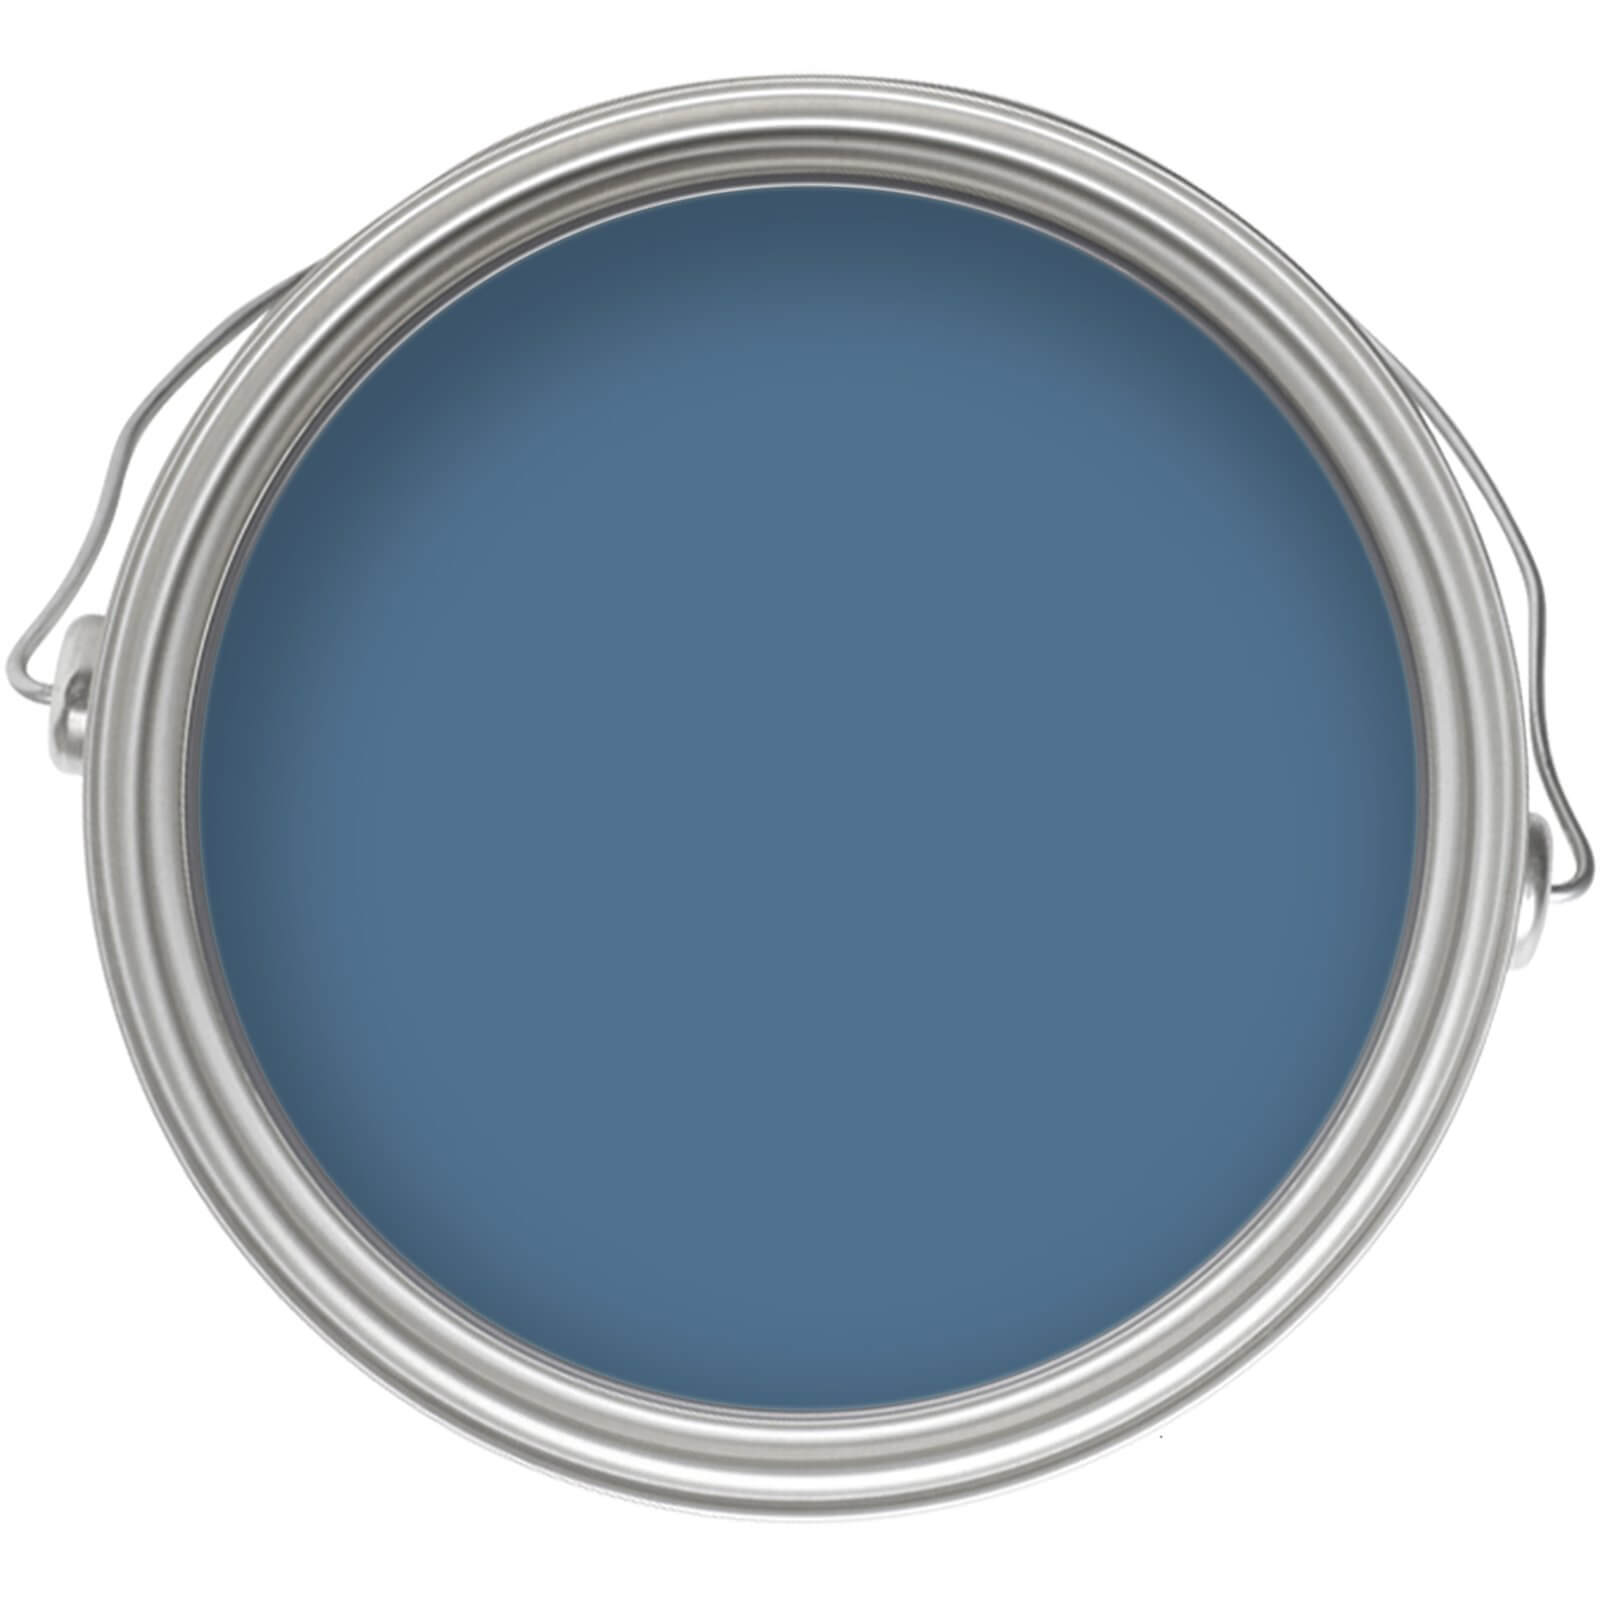 Homebase Exterior Satin Paint - Blazing Blue 750ml